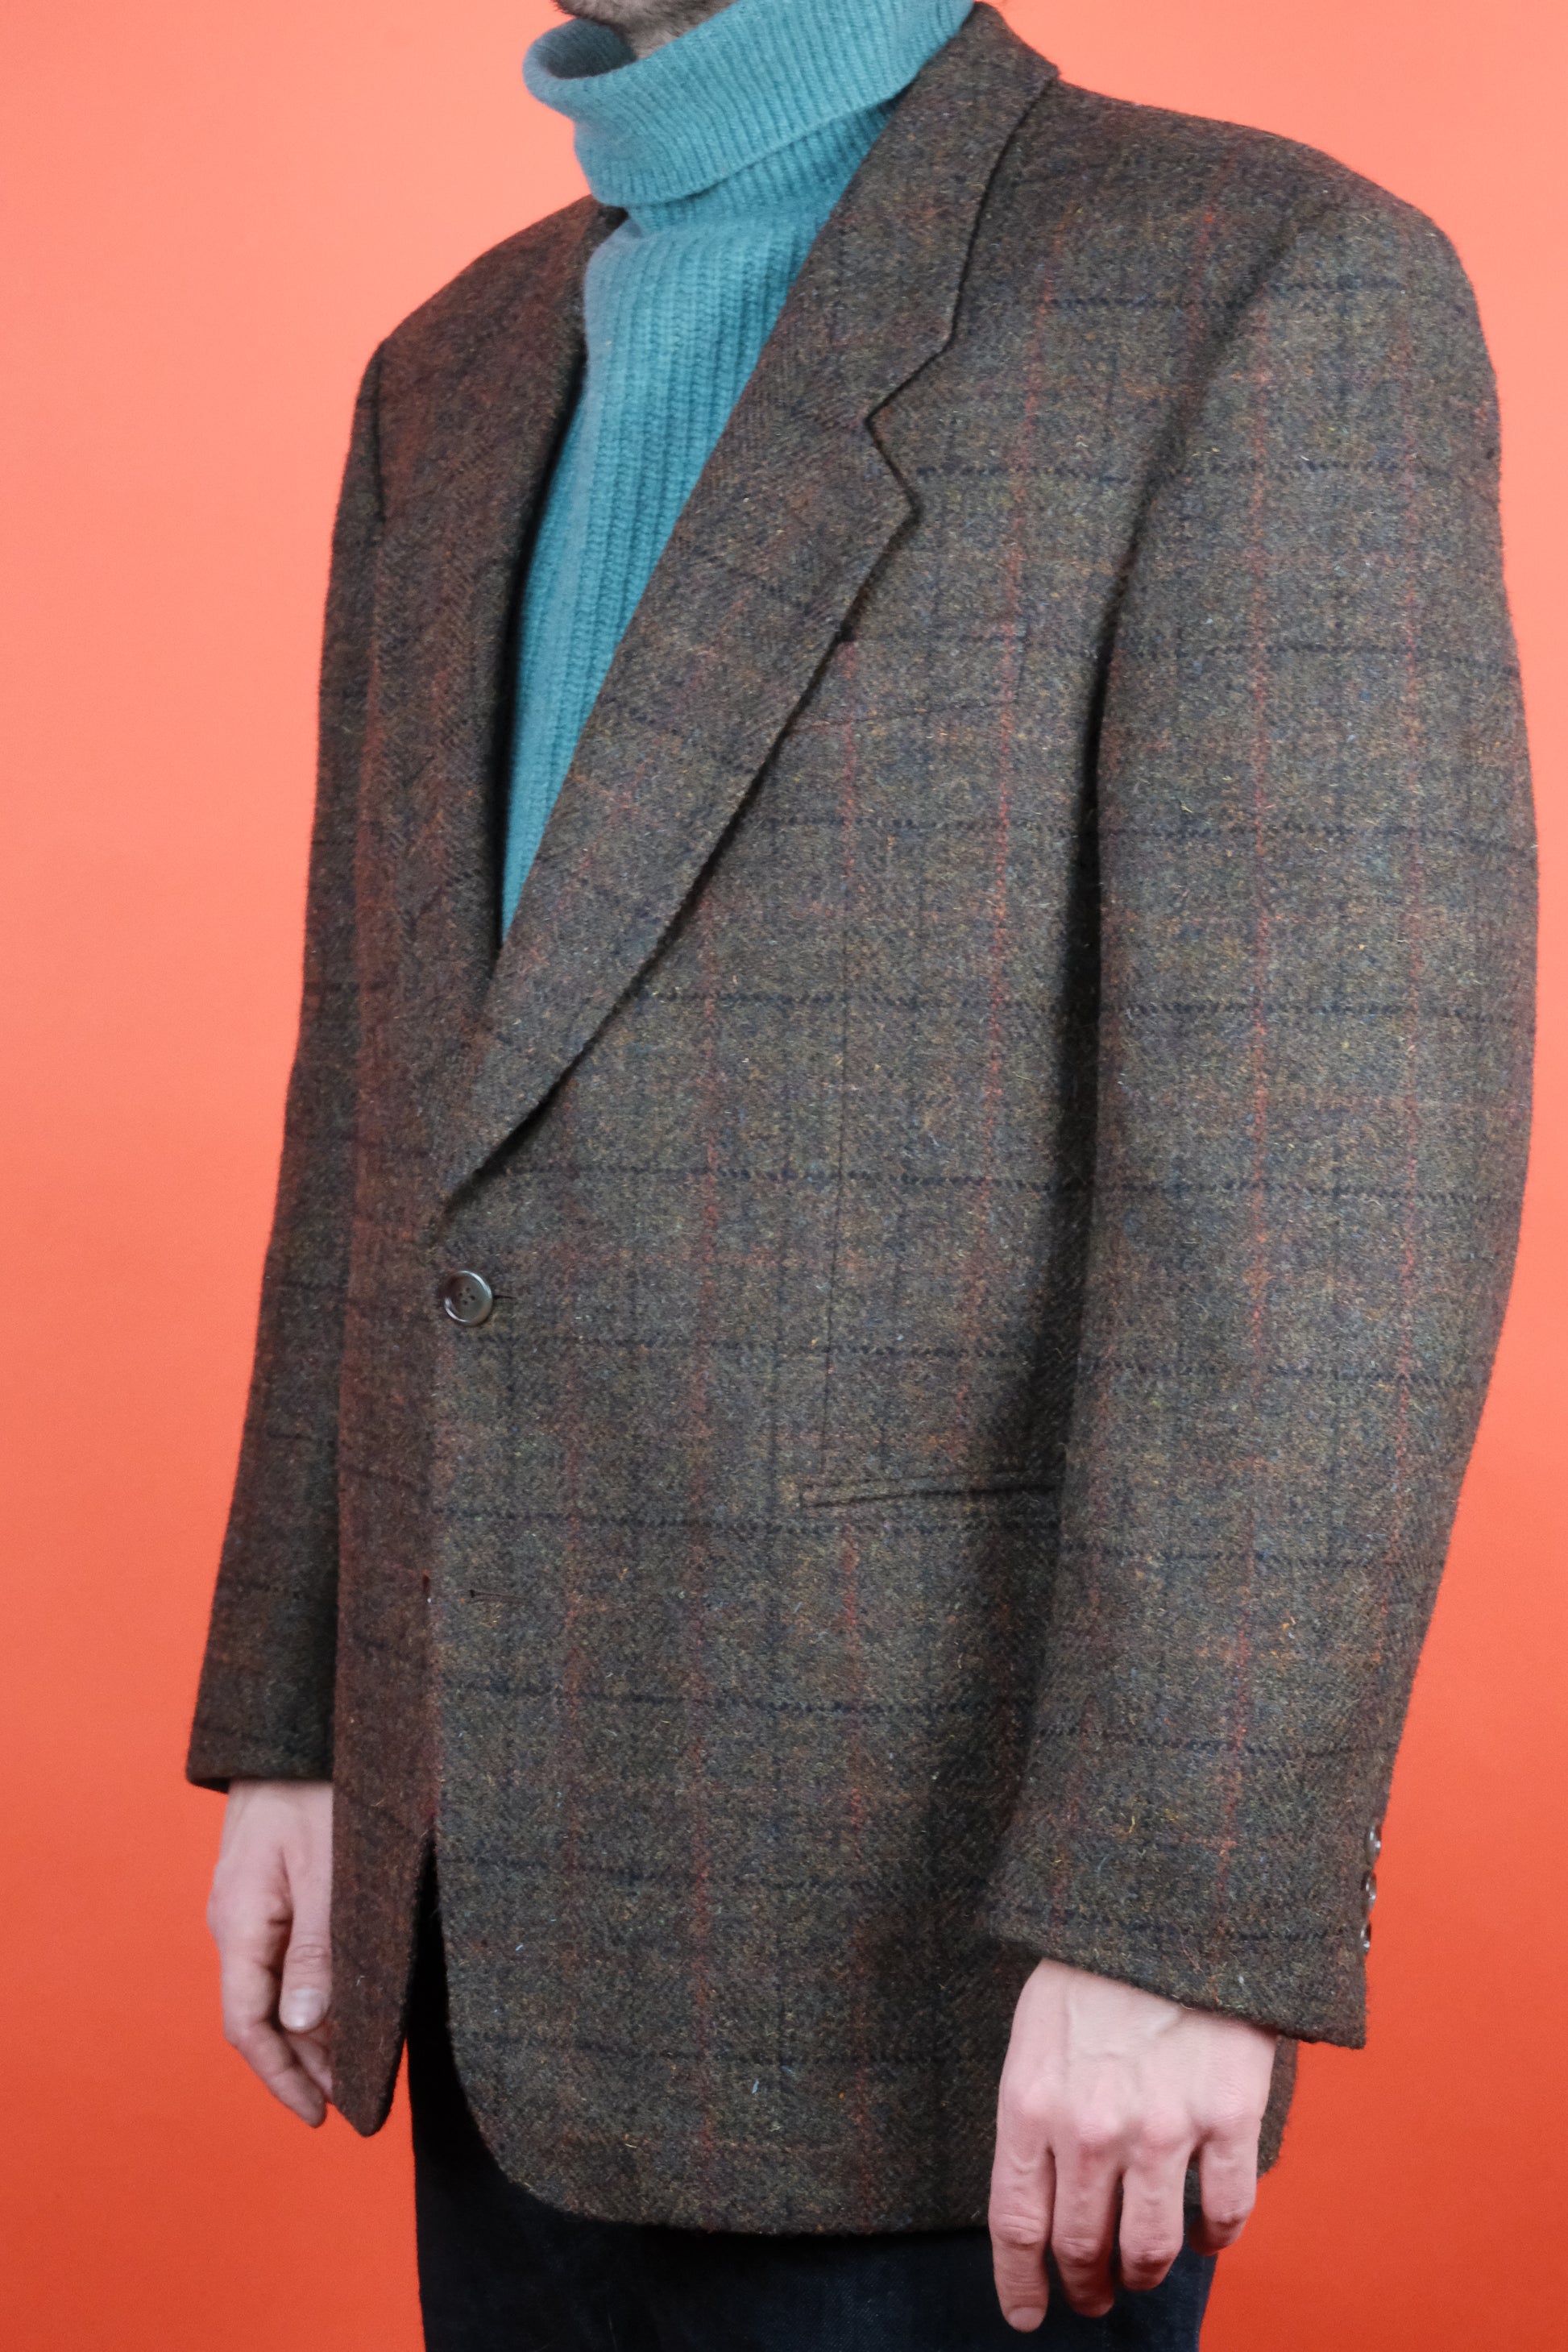 Konen Harris Tweed Suit Jacket 'L' - vintage clothing clochard92.com